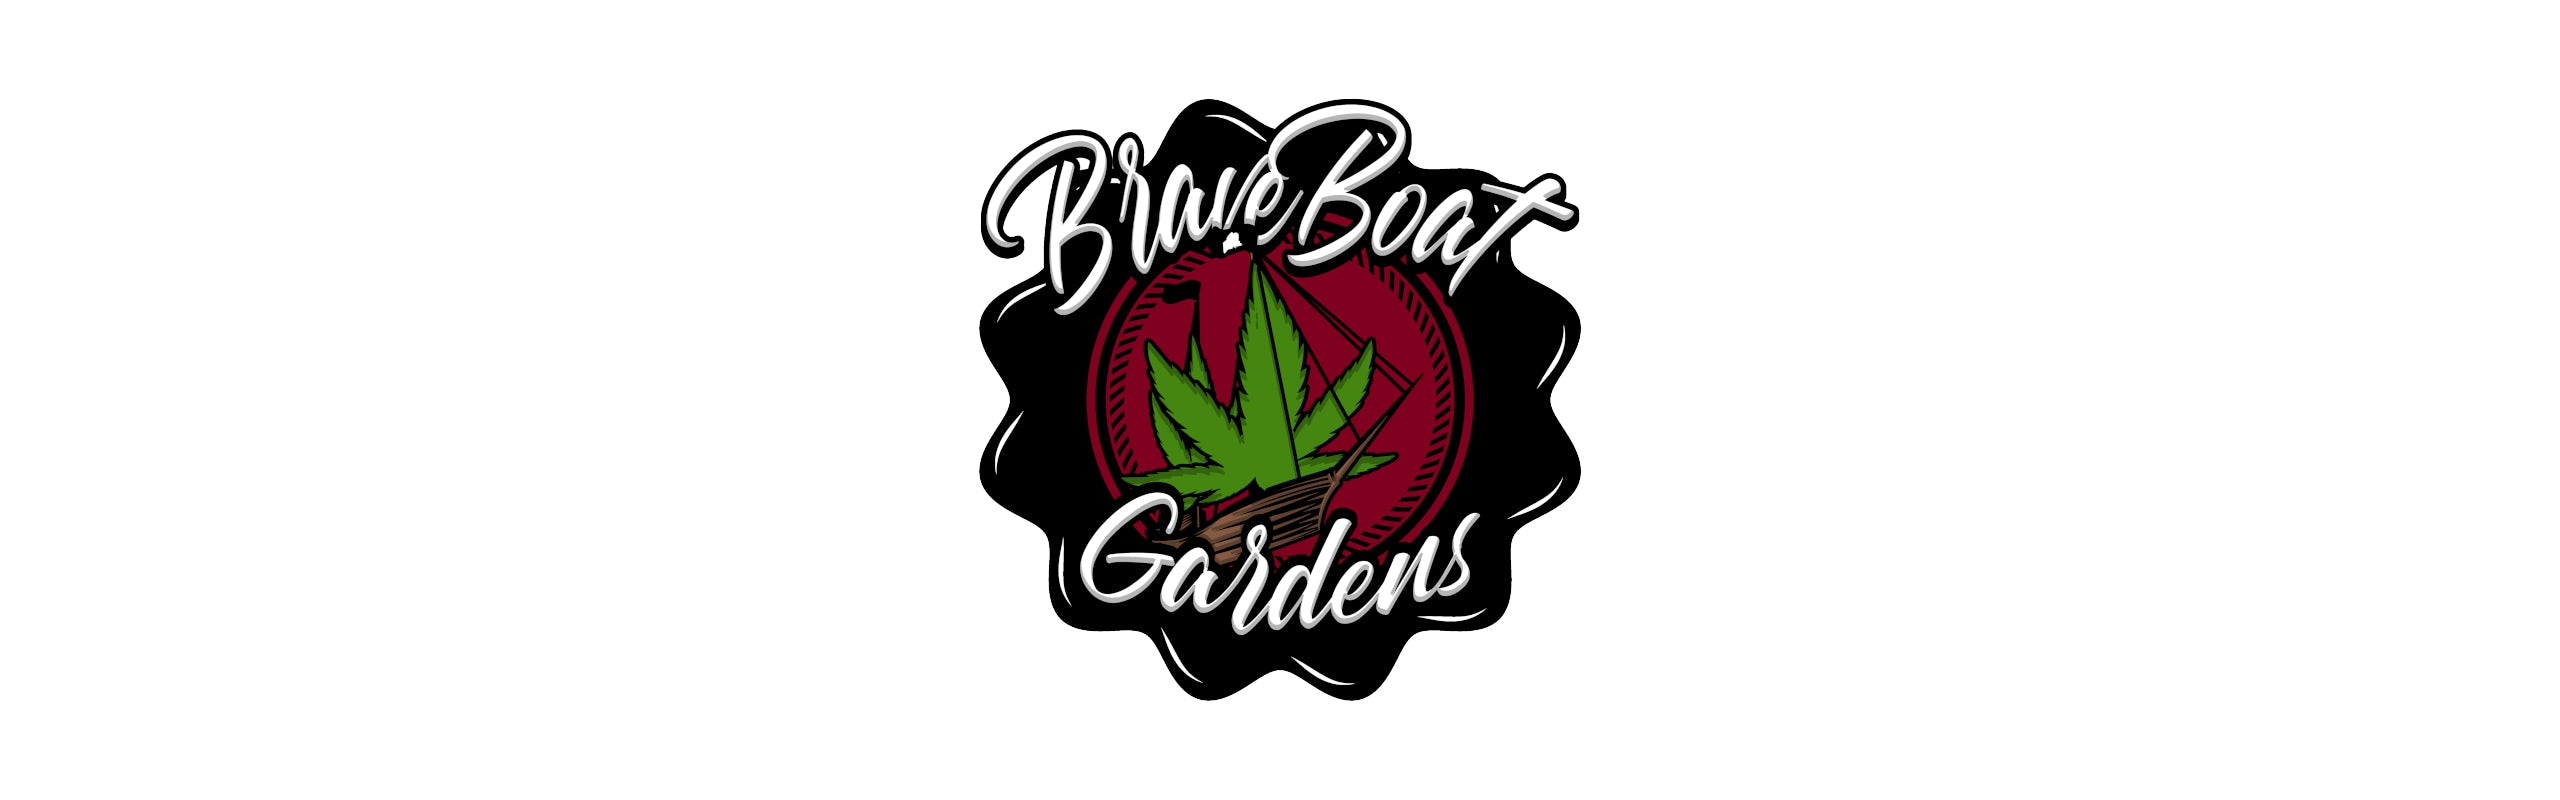 Brave Boat Gardens banner